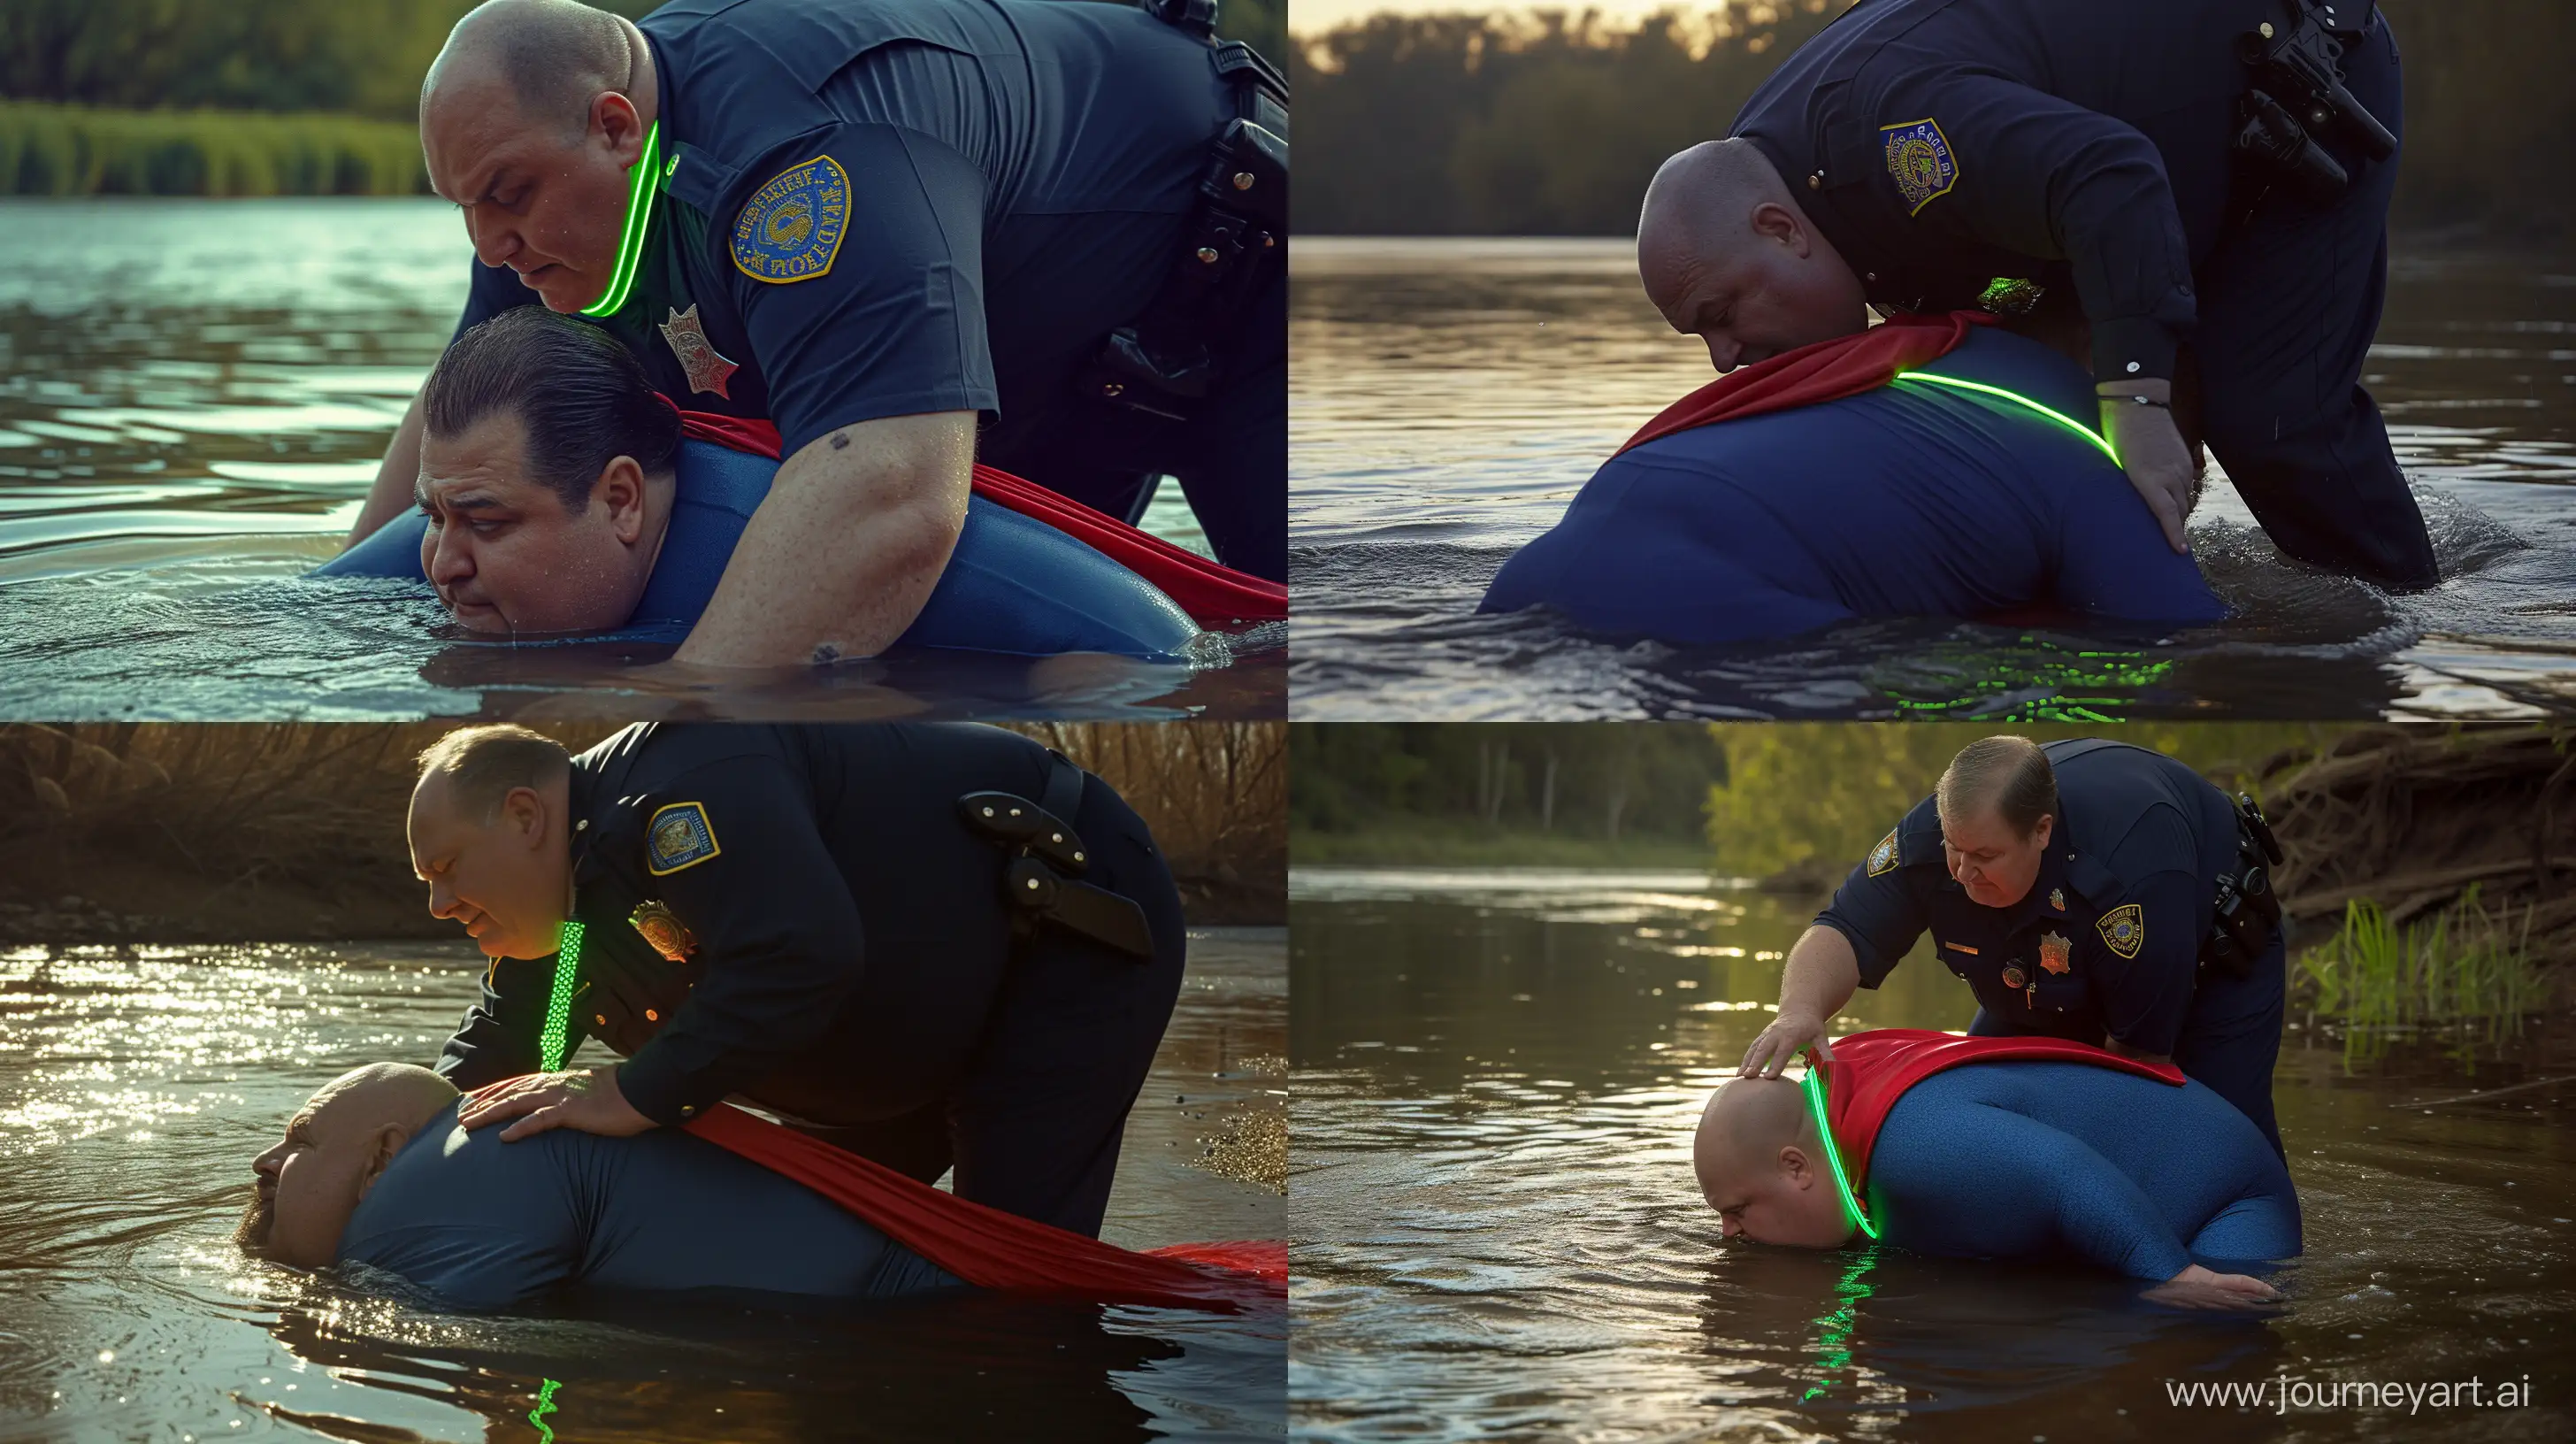 Senior-Police-Officer-Fastens-Neon-Dog-Collar-on-Superman-Costume-in-River